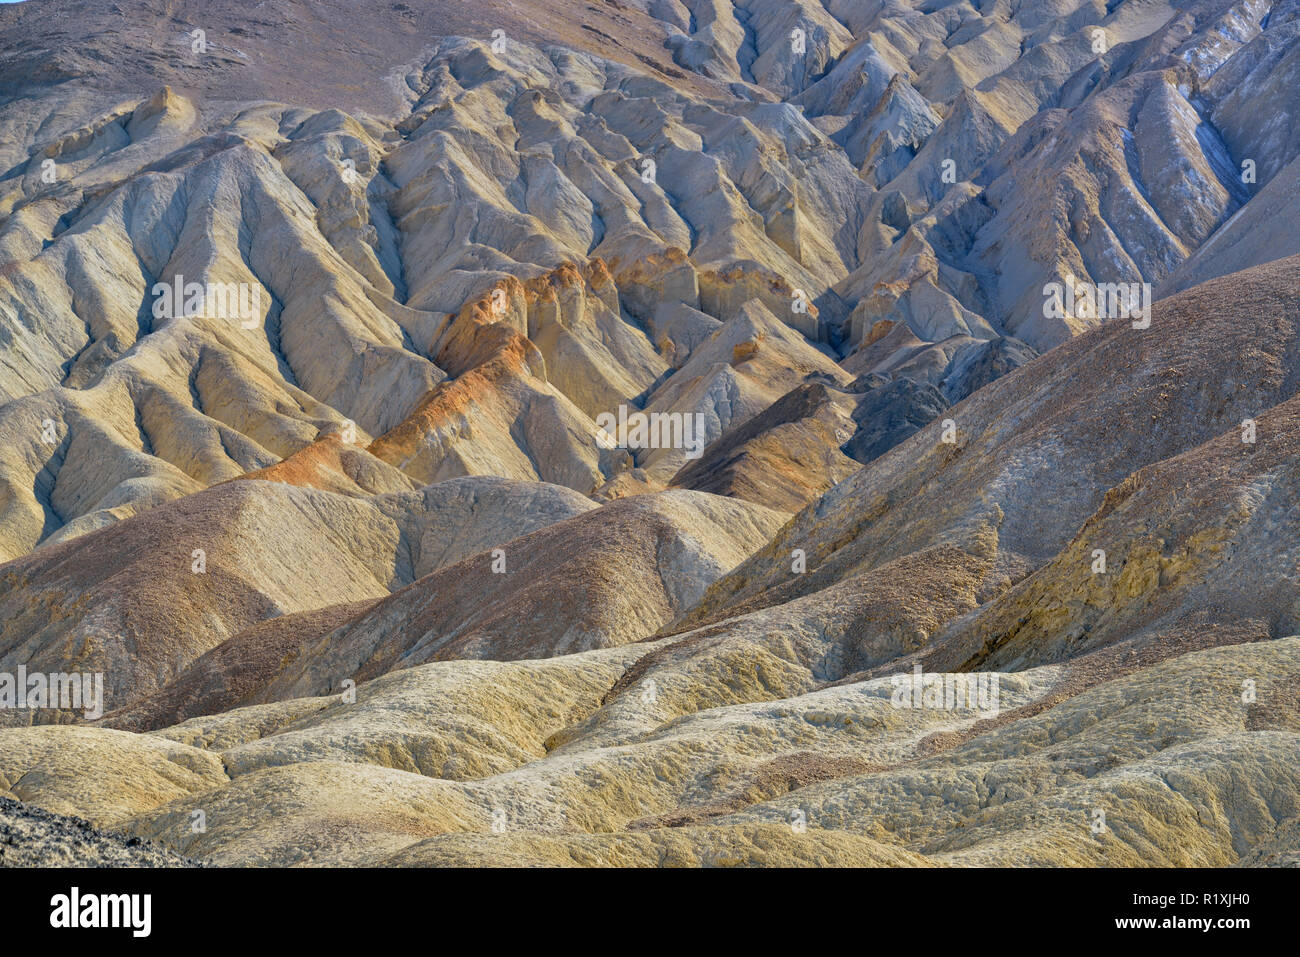 20 Mule Team Canyon, Death Valley National Park, Kalifornien, USA Stockfoto